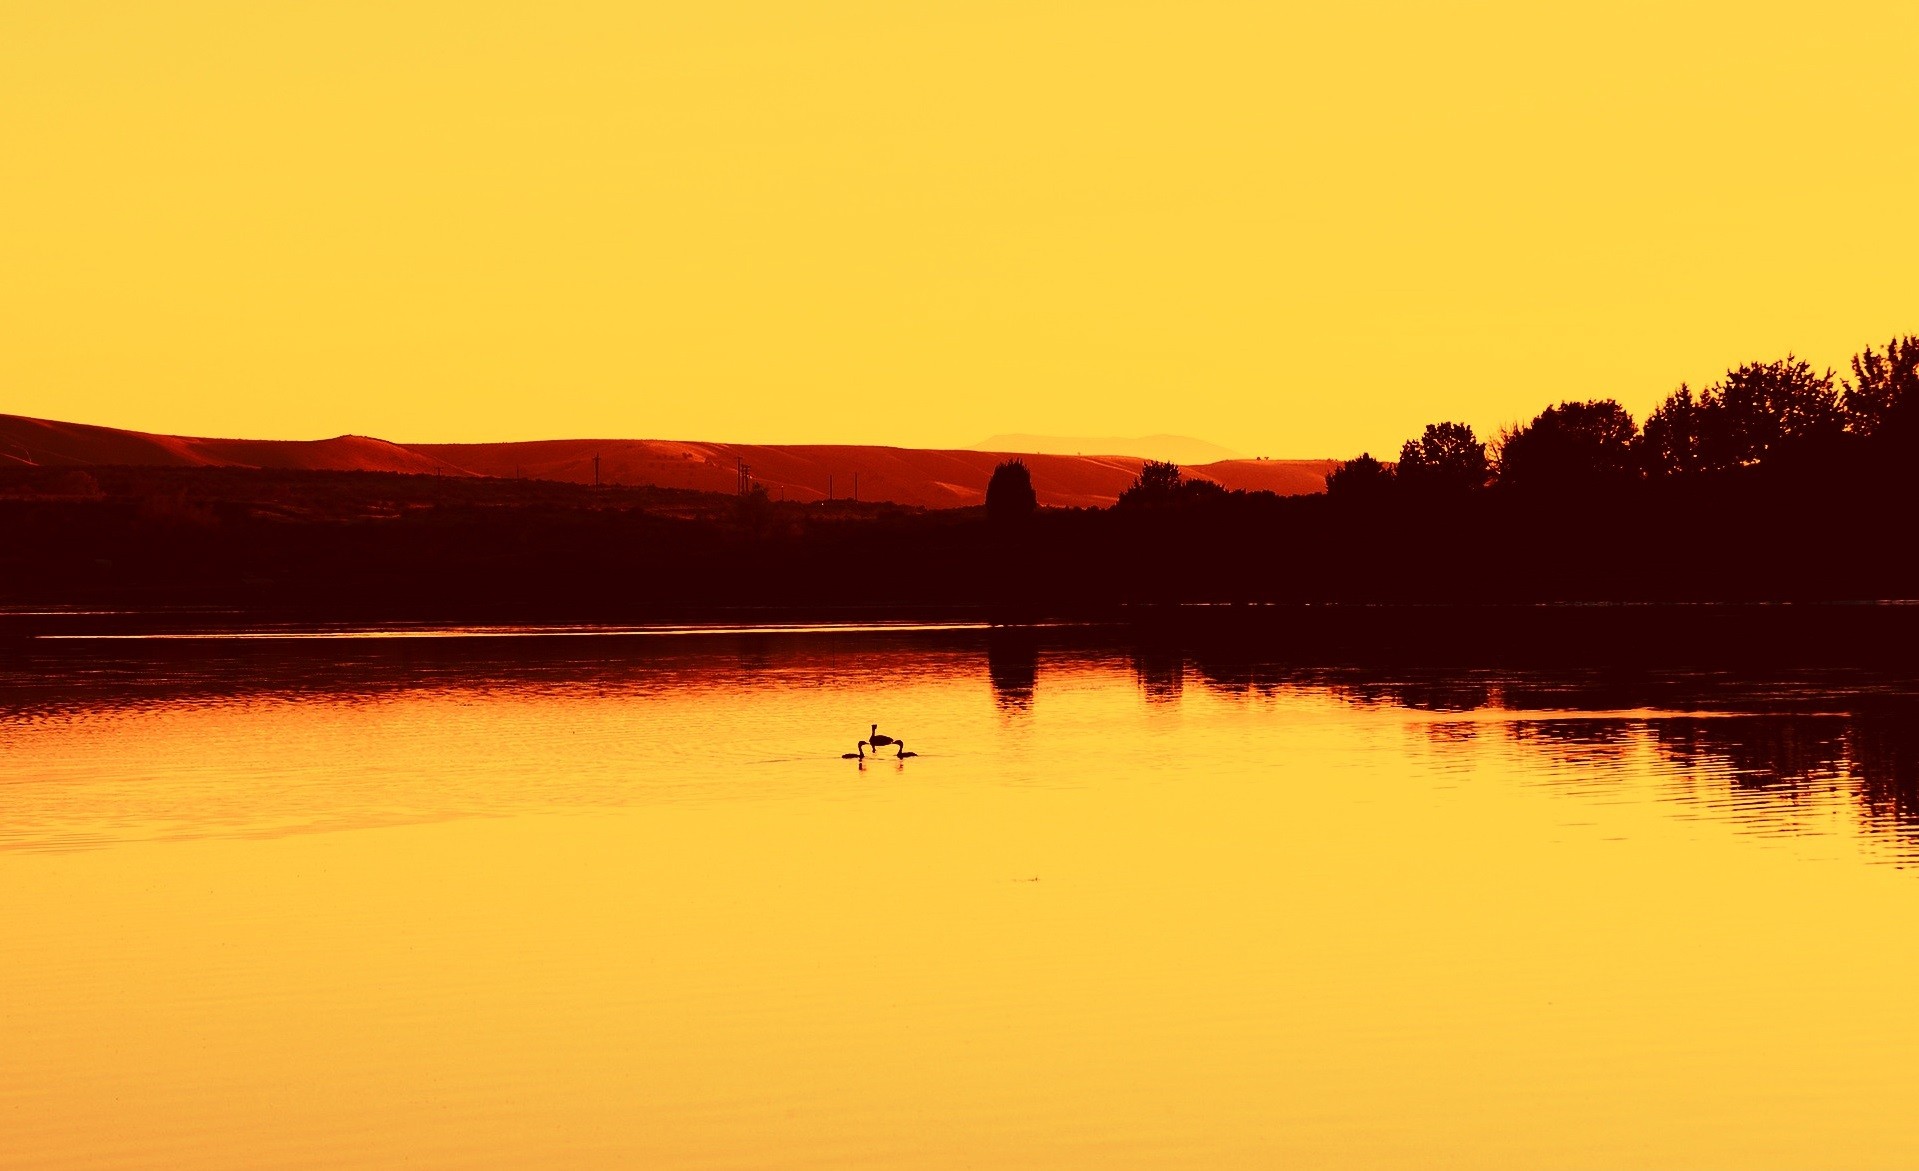 General 1919x1171 photography landscape water sunset orange trees lake sky nature animals birds reflection yellow sky